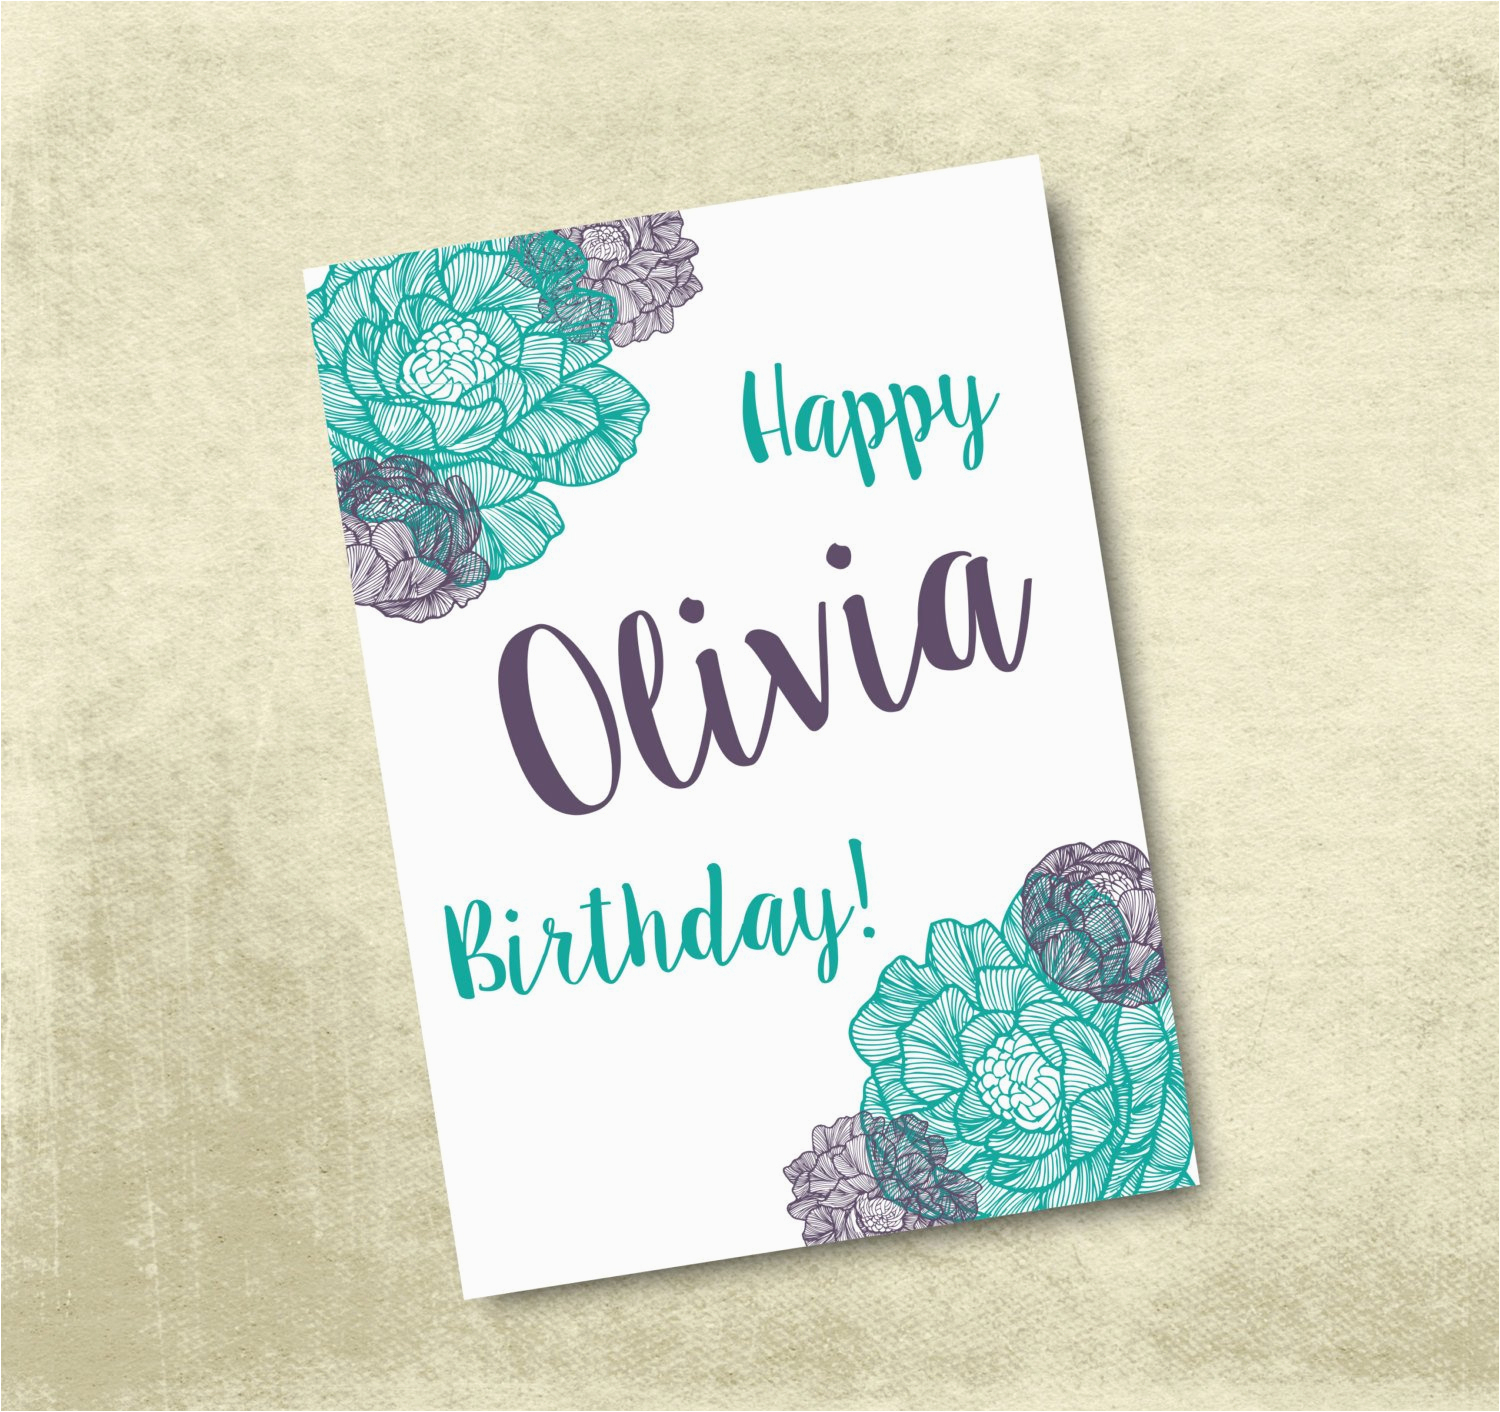 Customized Birthday Cards Free Printable | Birthdaybuzz - Customized Birthday Cards Free Printable